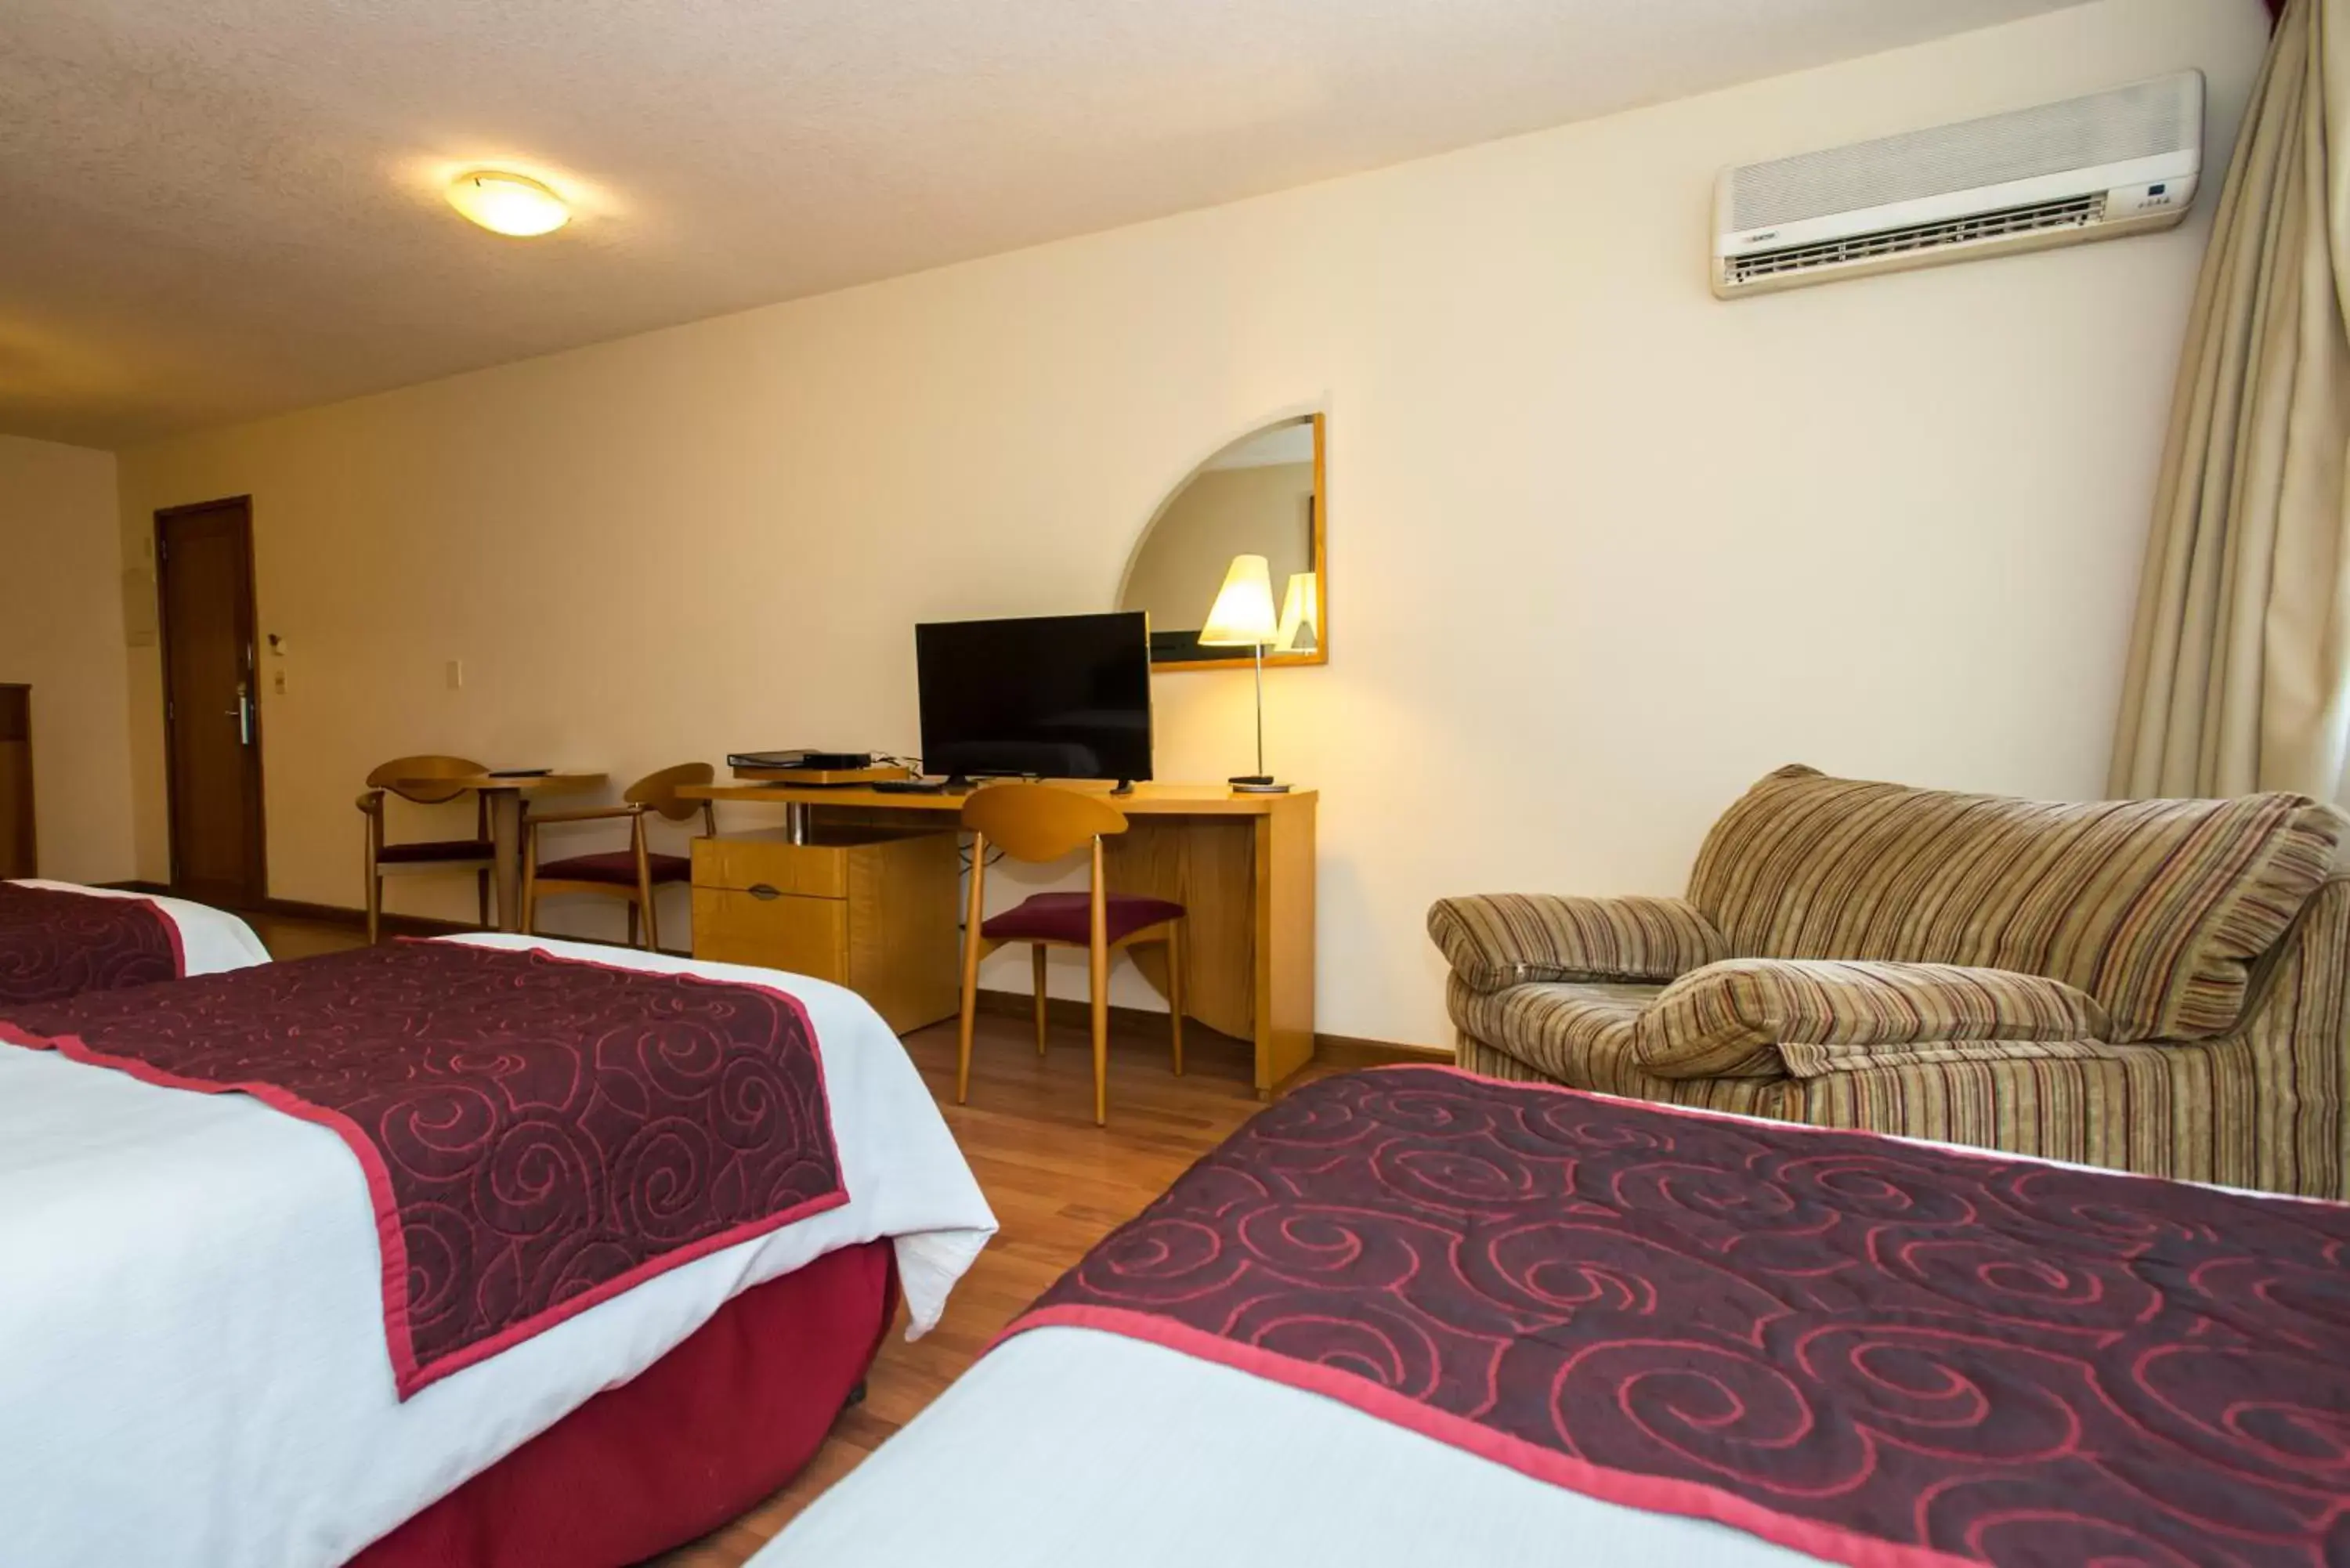 Bedroom, Room Photo in Armon Suites Hotel